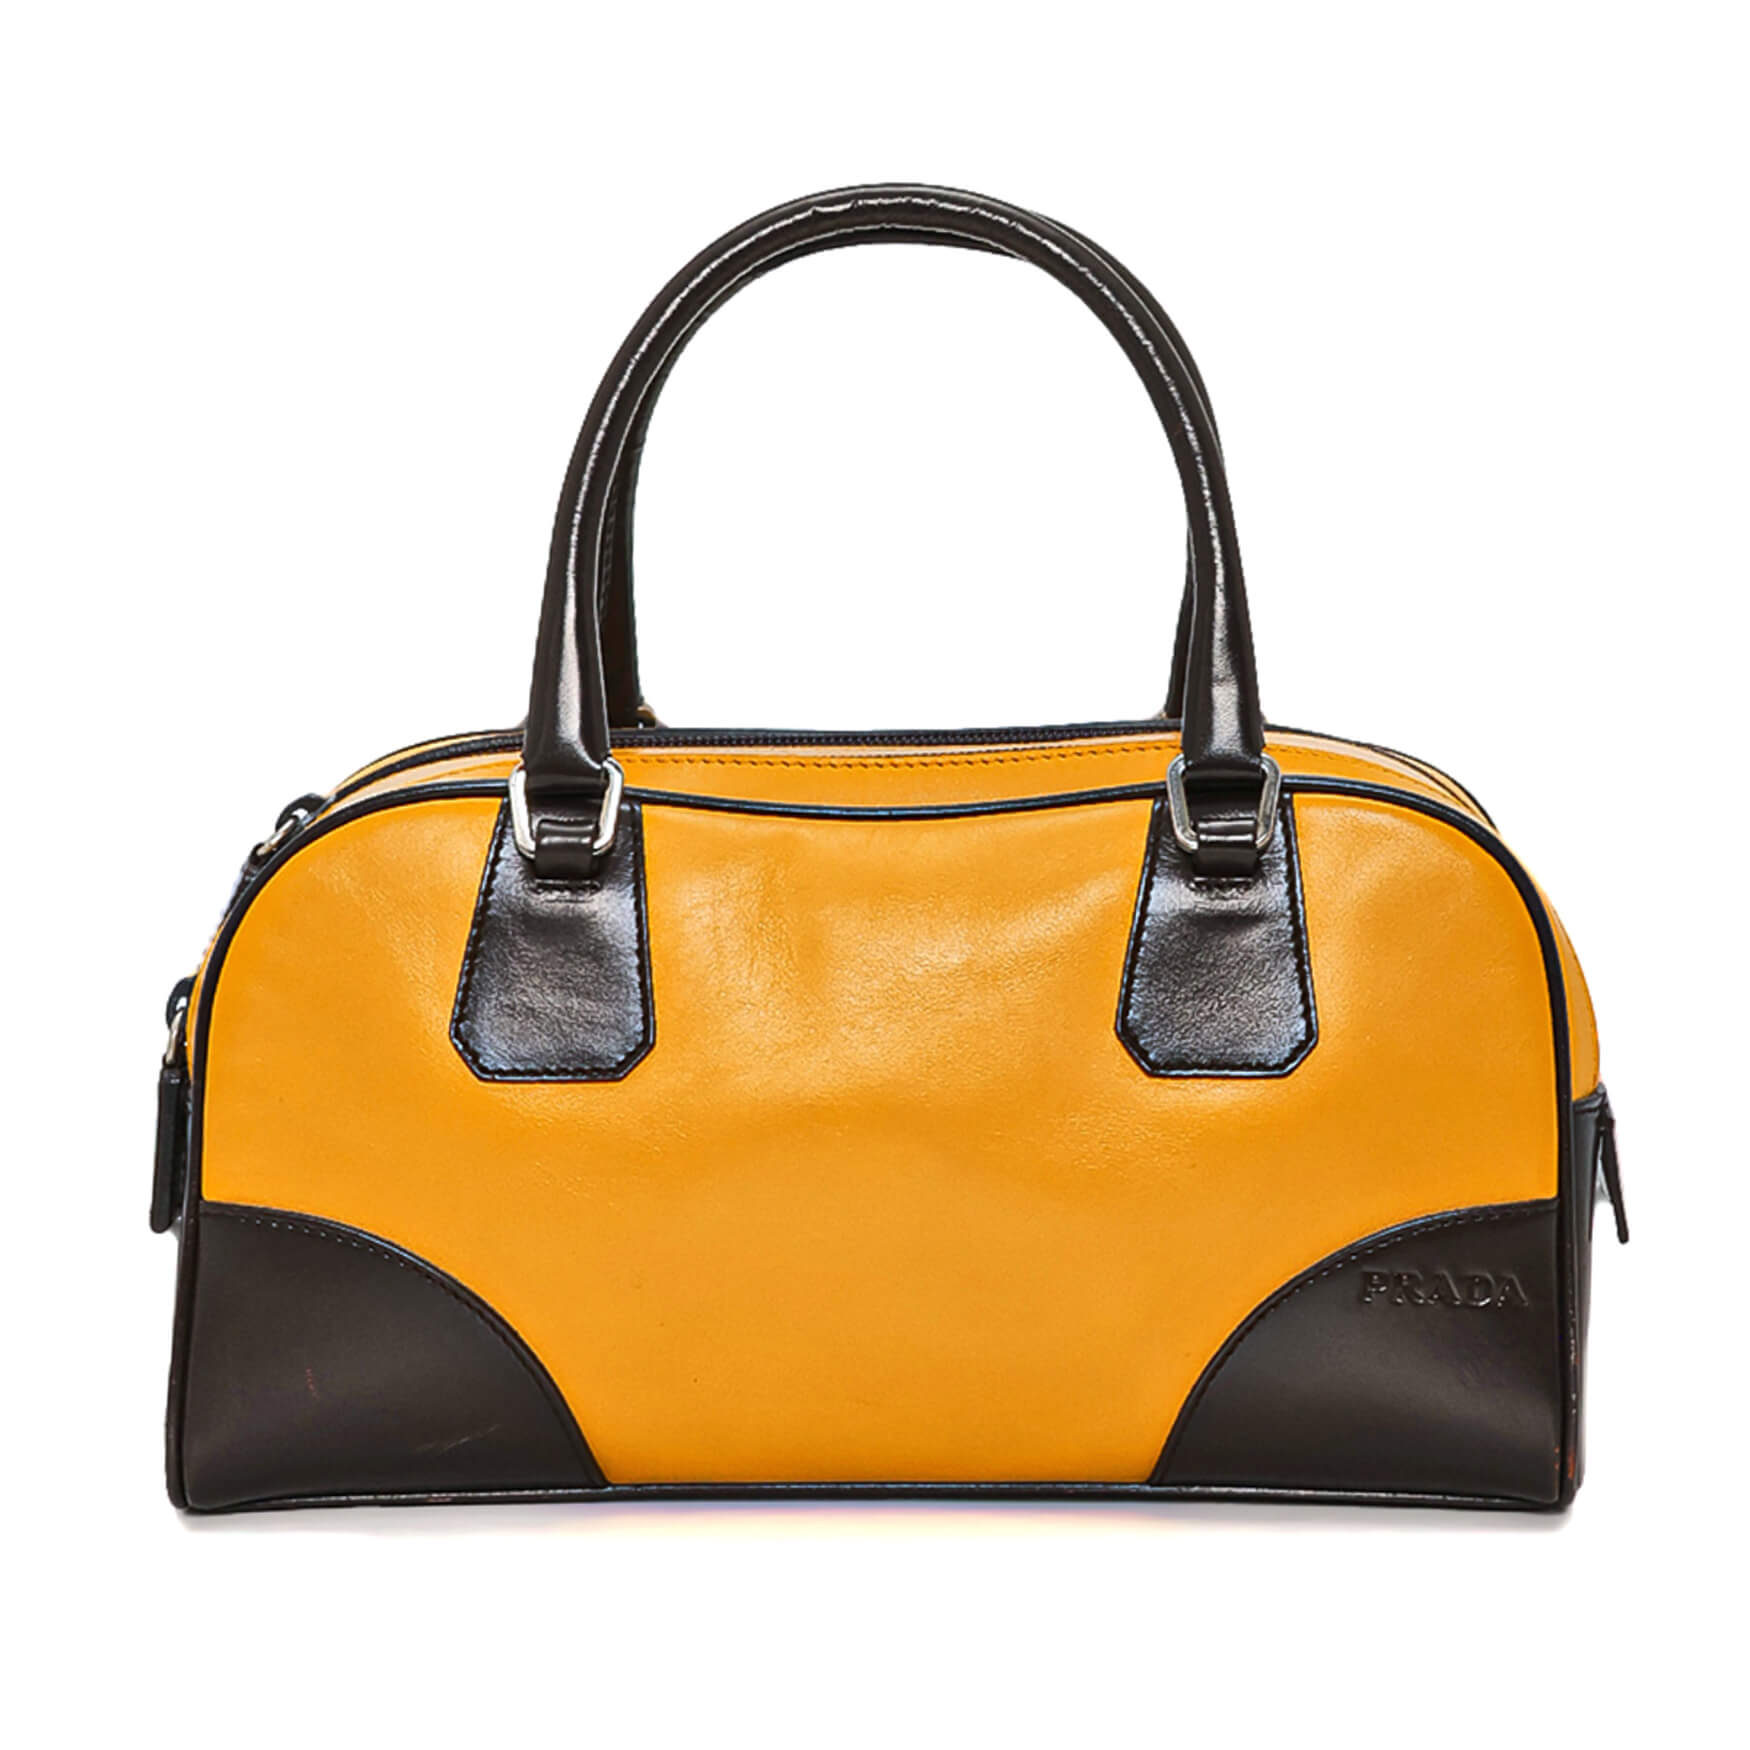 Prada - Yellow&Black Leather Mini Handbag